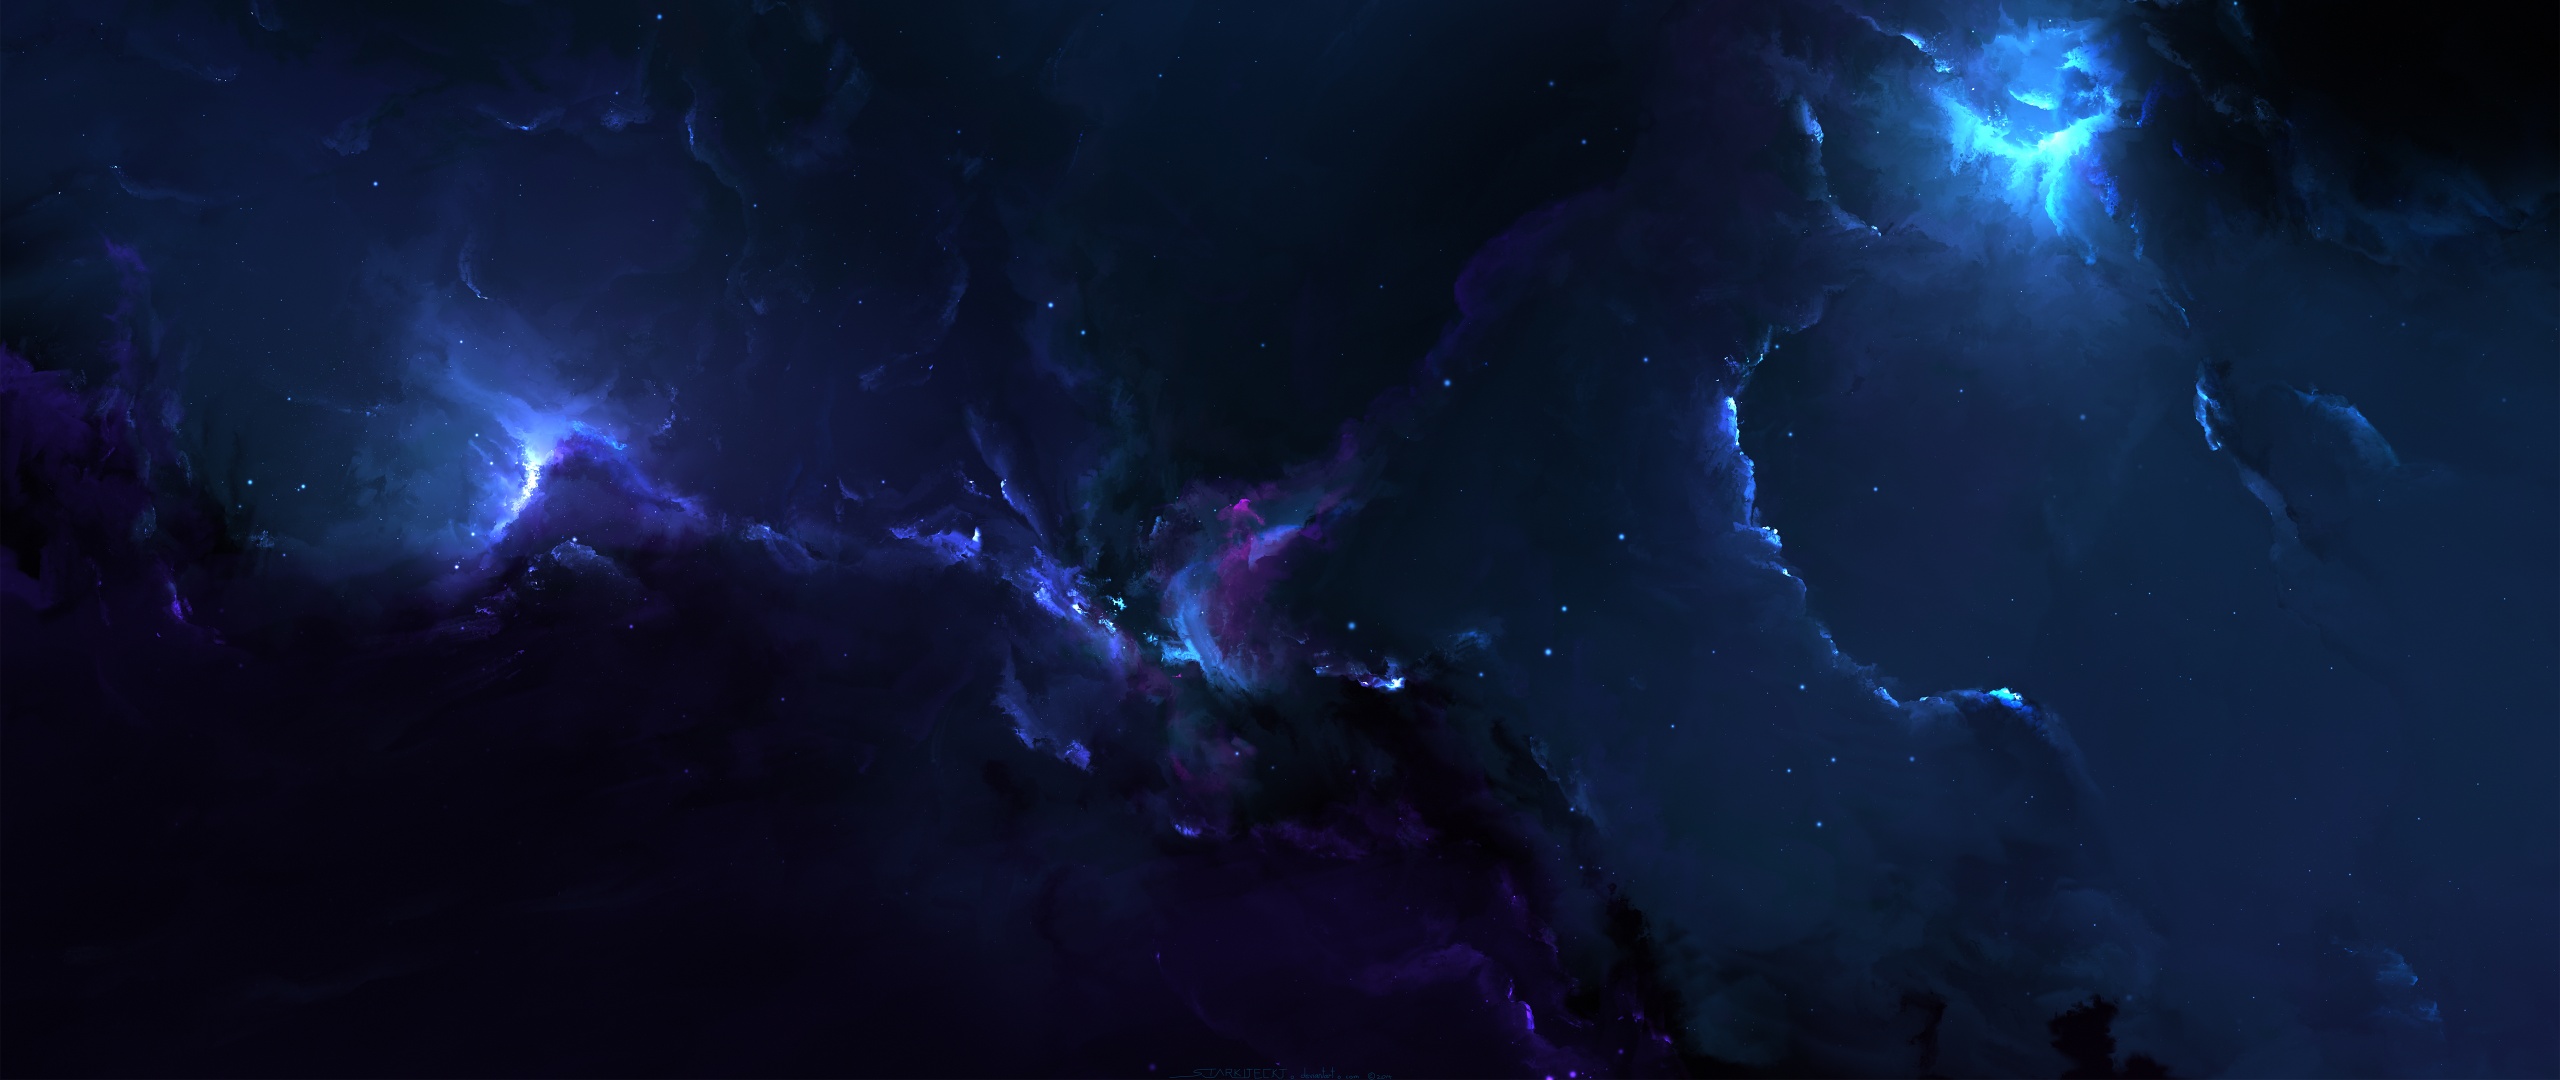 Nebulae Wallpaper 4K, Cosmic, Stars, Dark blue, Dark background, Space